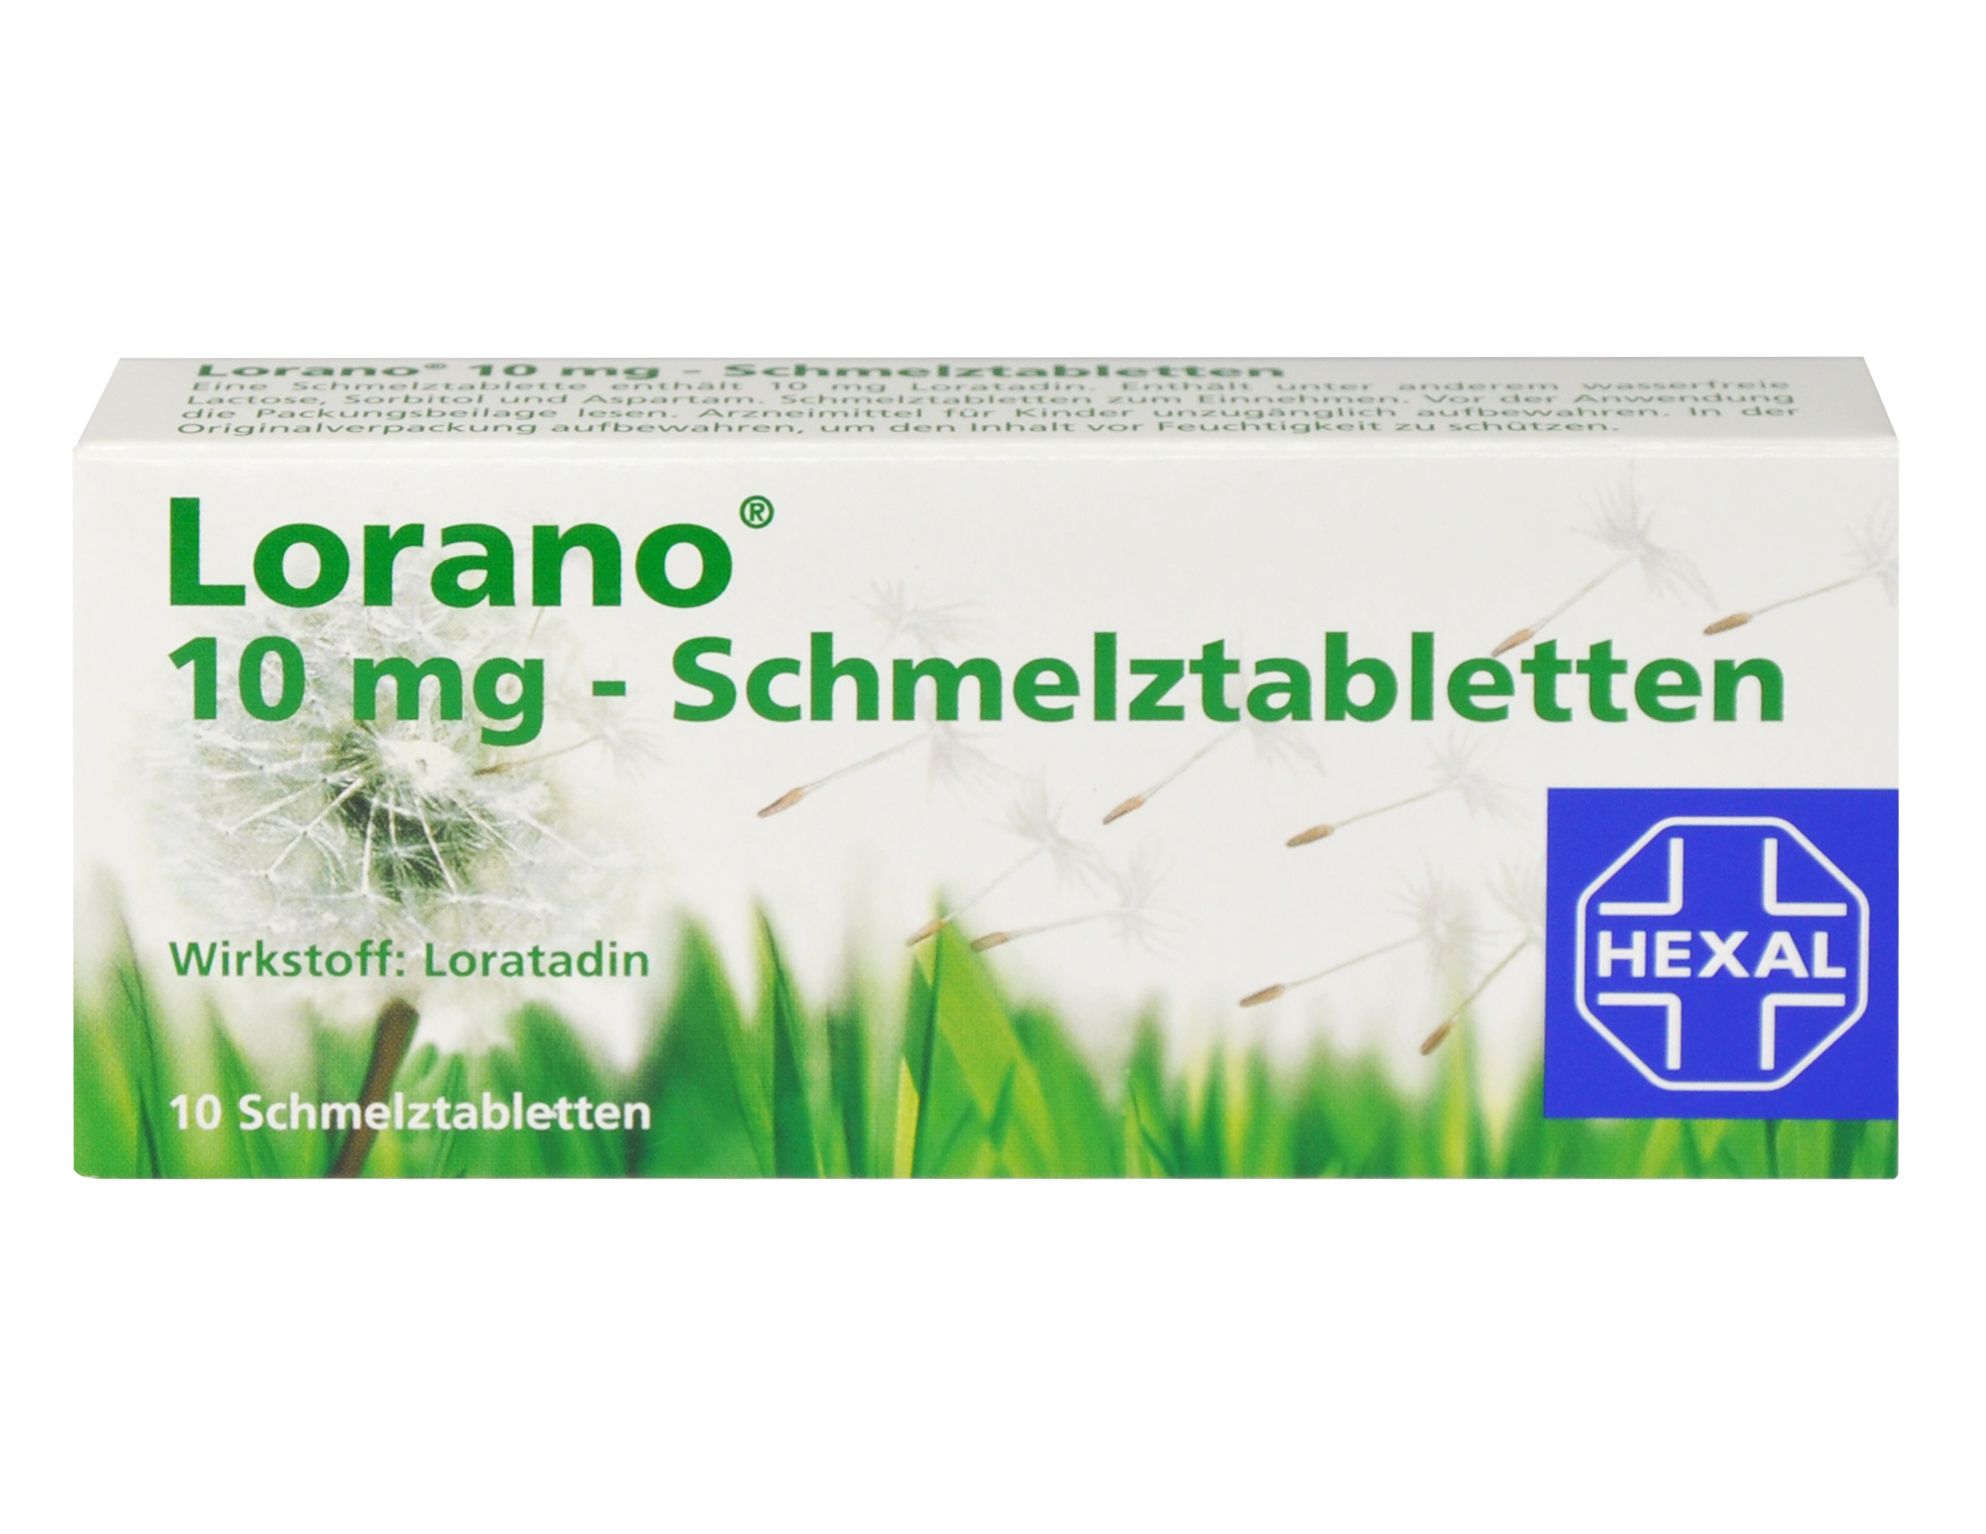 Abbildung Lorano 10 mg - Schmelztabletten